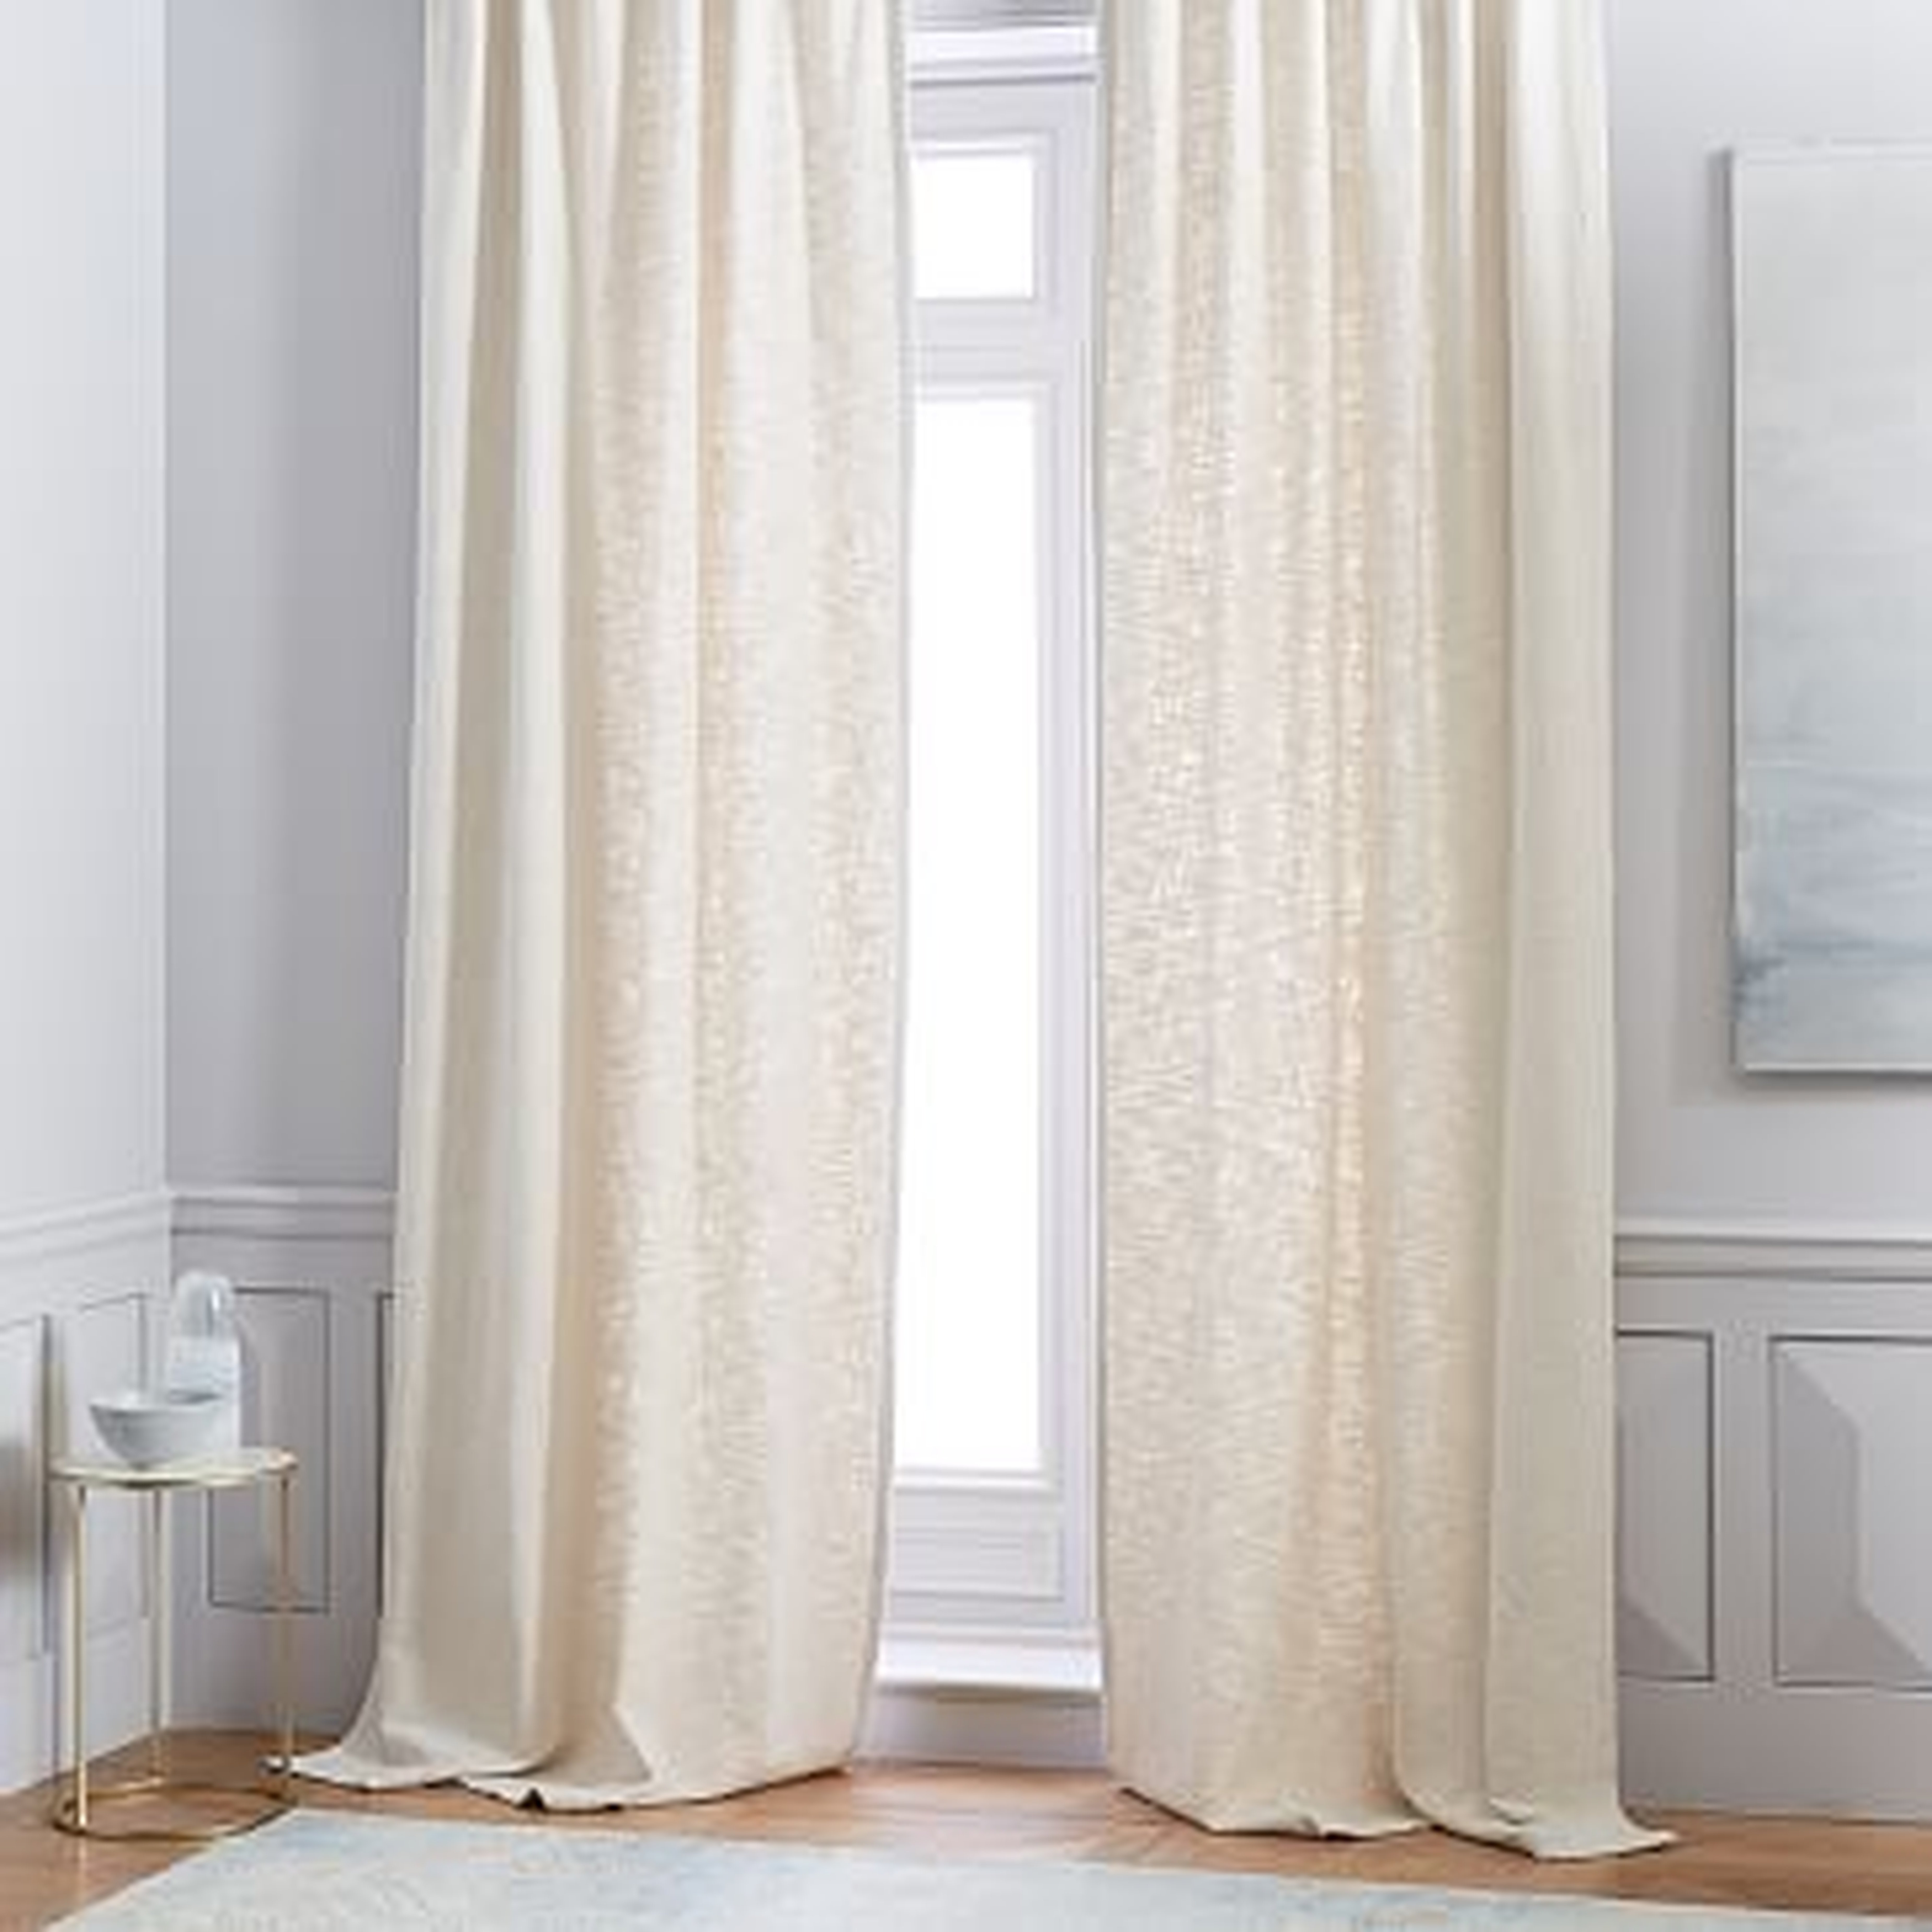 Cotton Textured Weave Curtain - Stone White - West Elm